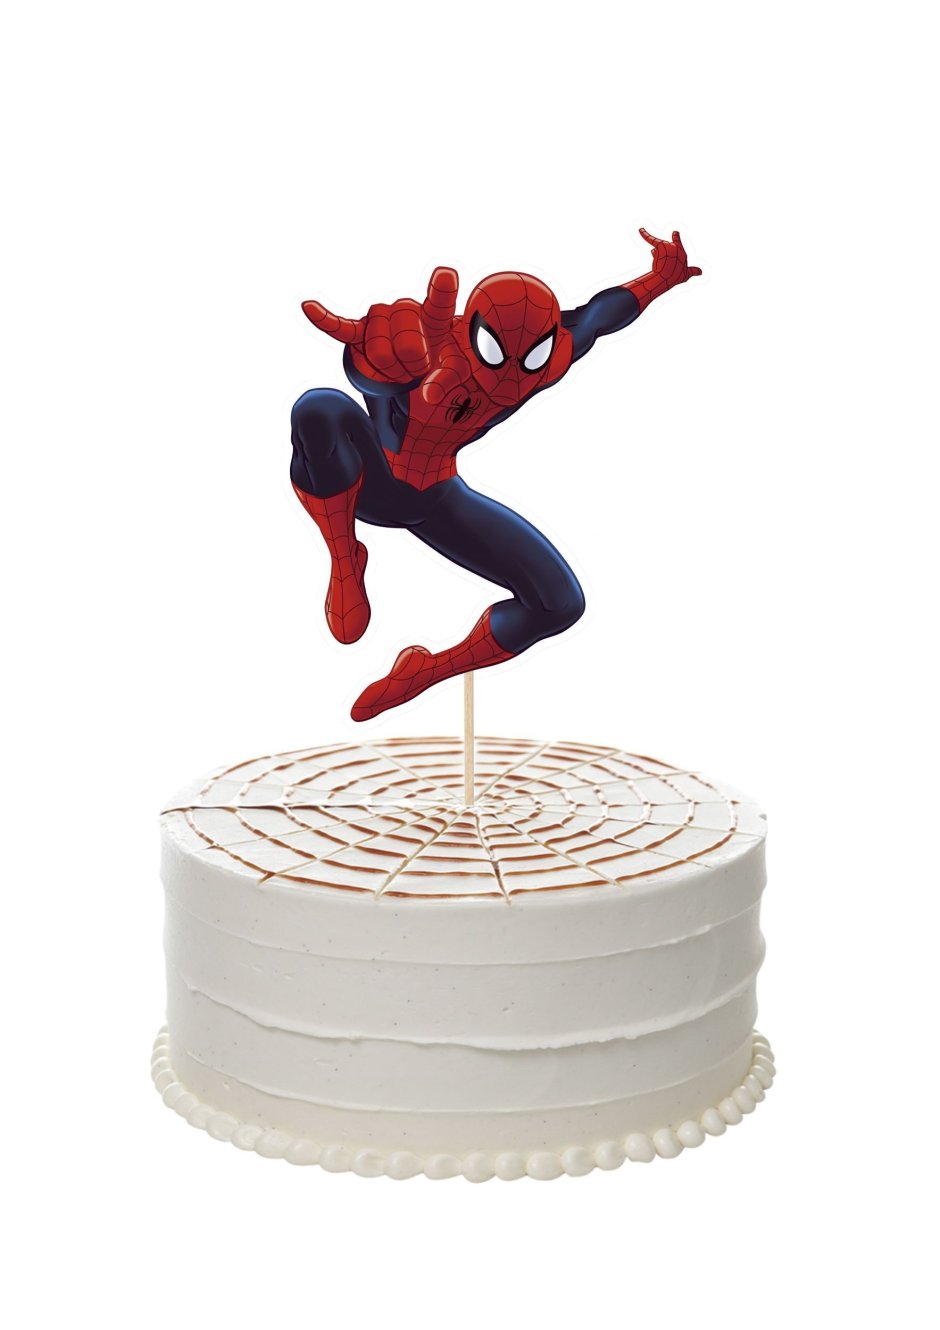 Топпер человек паук на торт